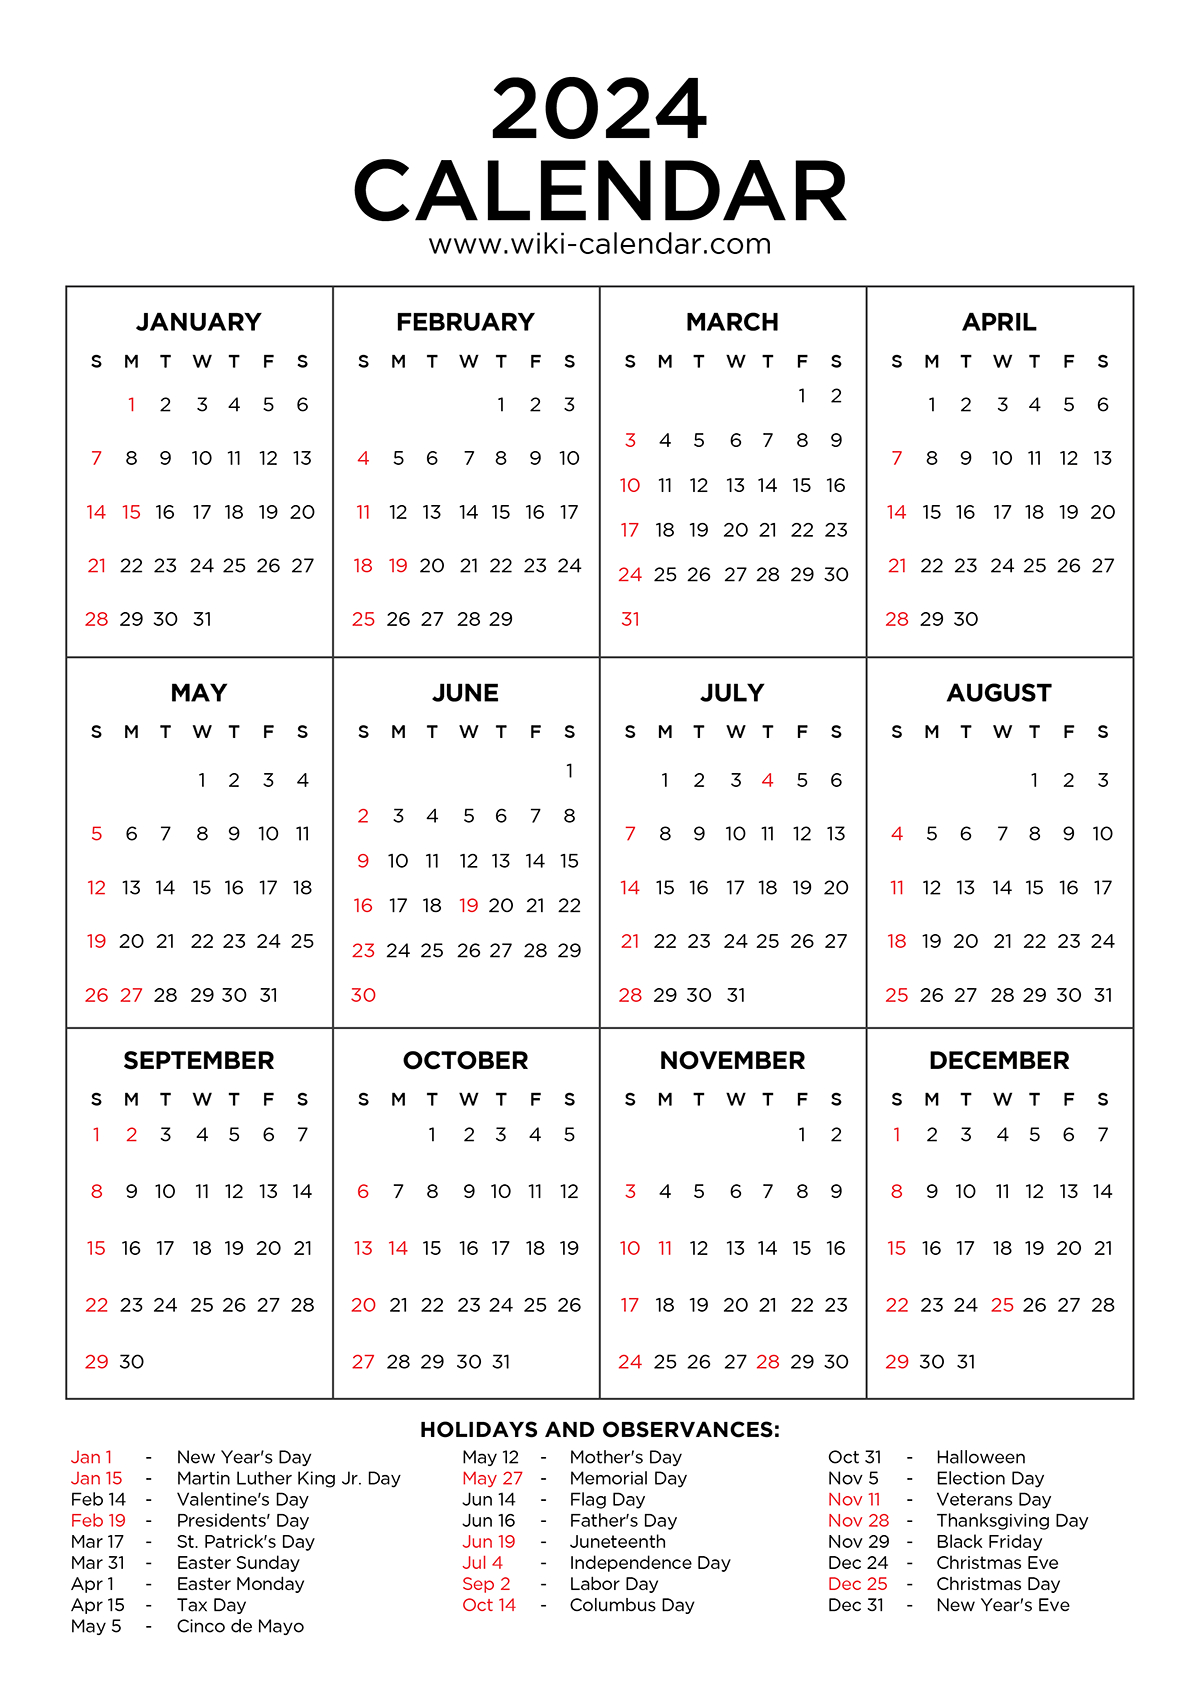 Year 2024 Calendar Printable With Holidays - Wiki Calendar throughout Free Printable Booklet Calendar 2024